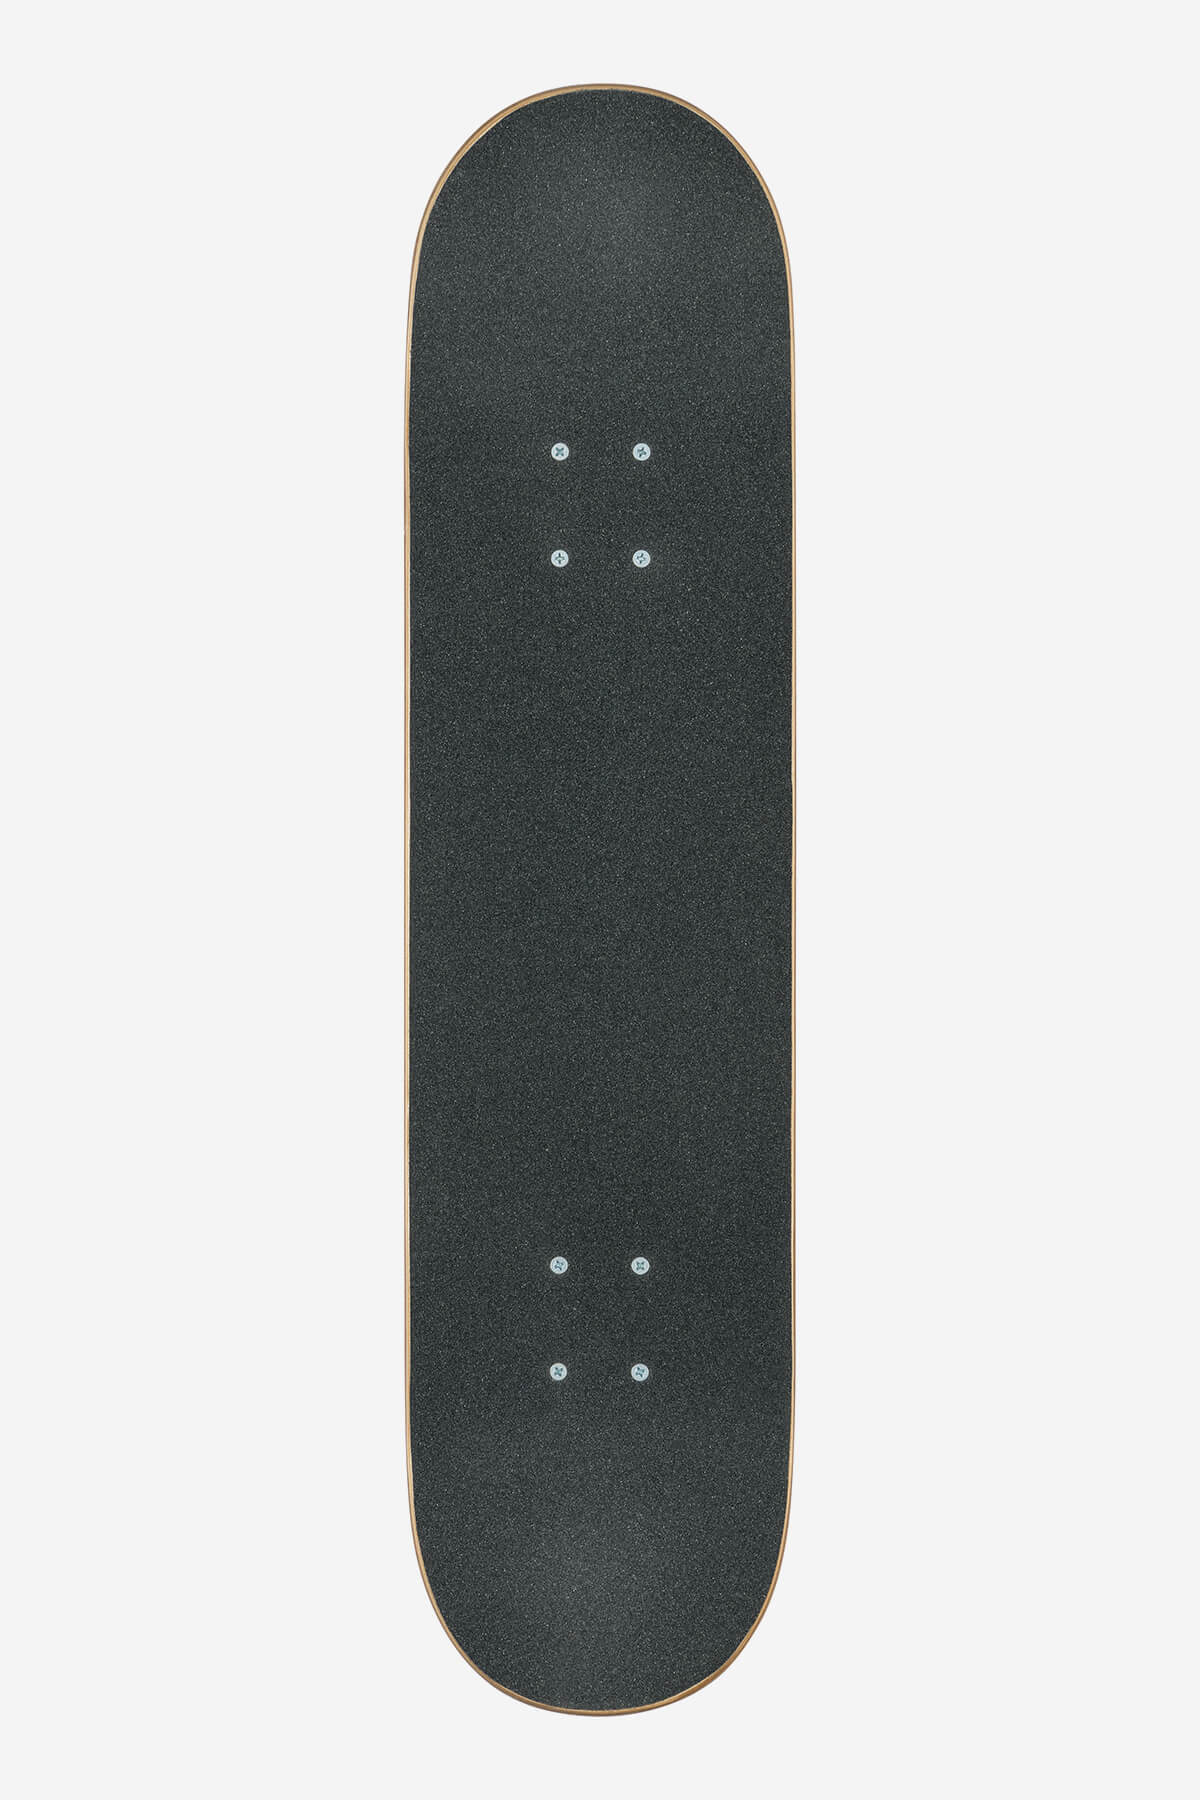 Globe - G0 Fubar - Negro/Red - 7.75" Completo Skateboard